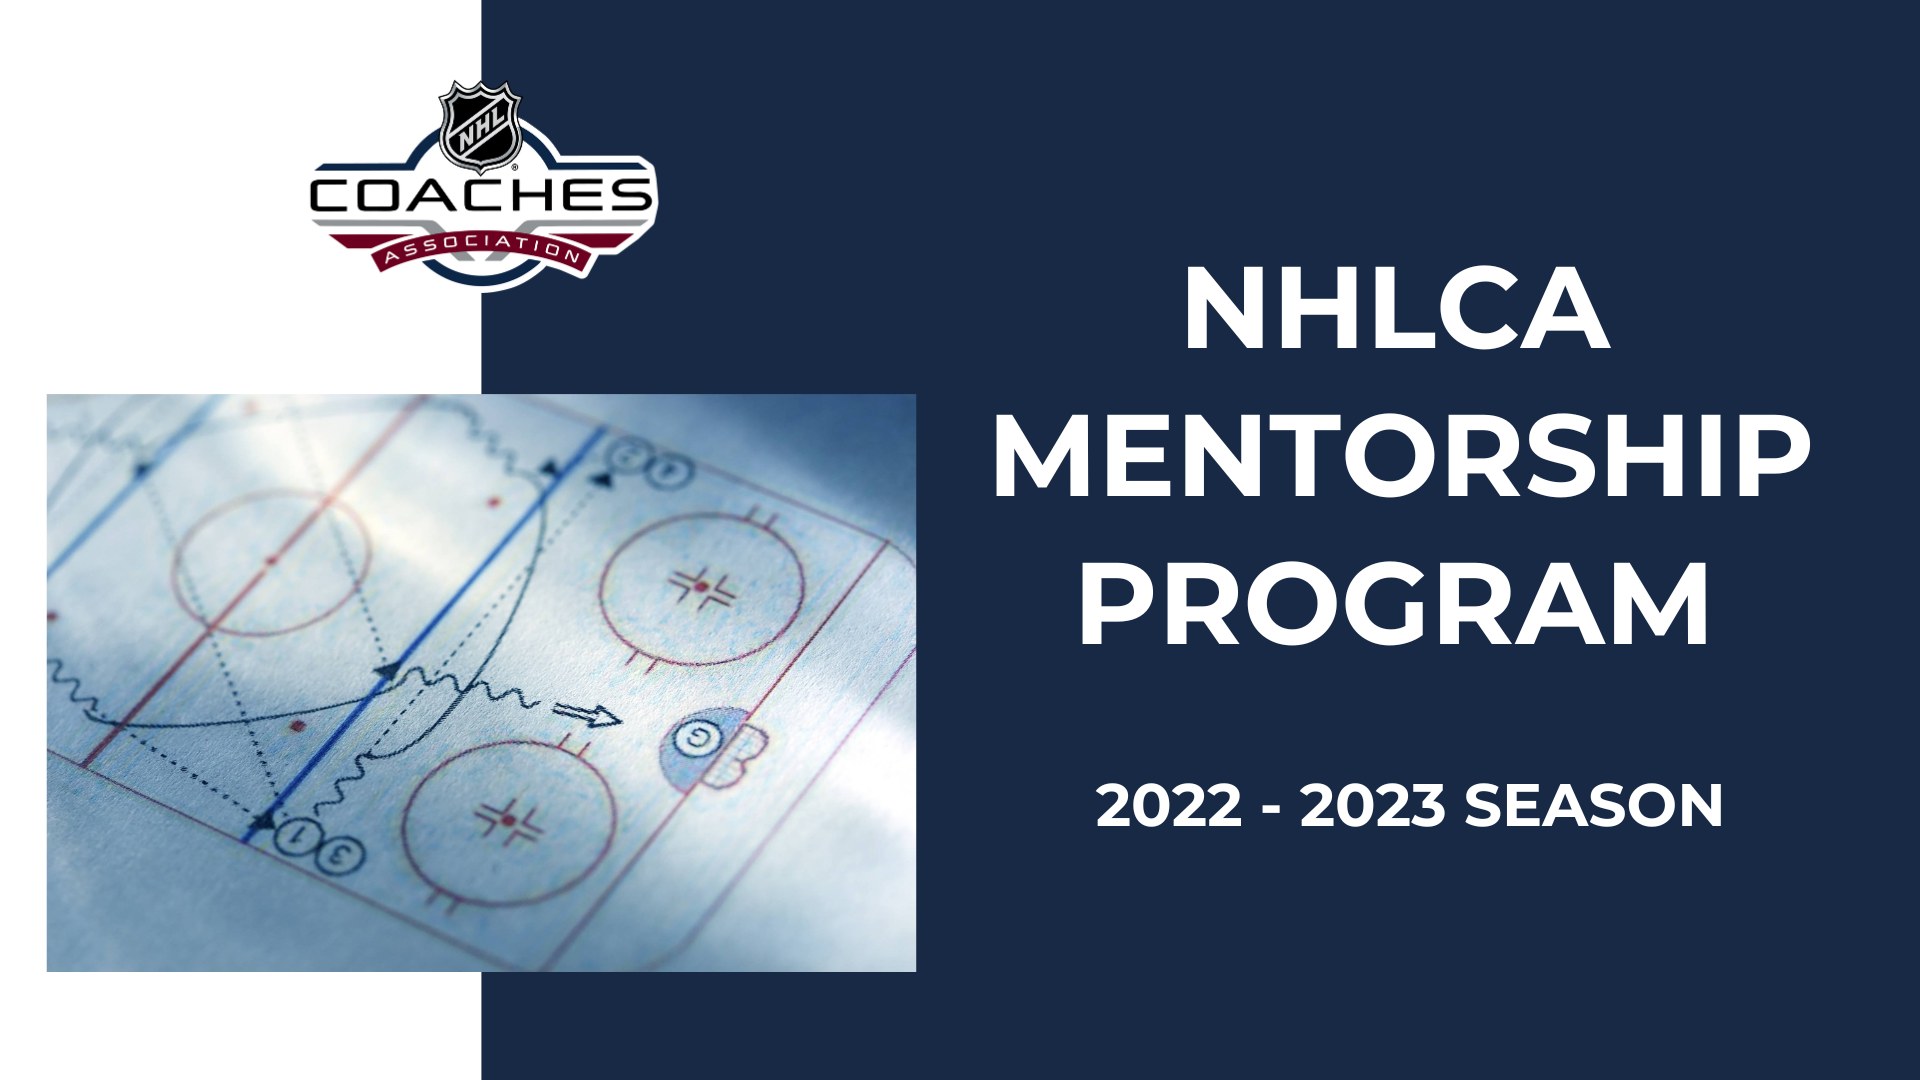 NHLCA Mentorship Program: 2022-2023 Season